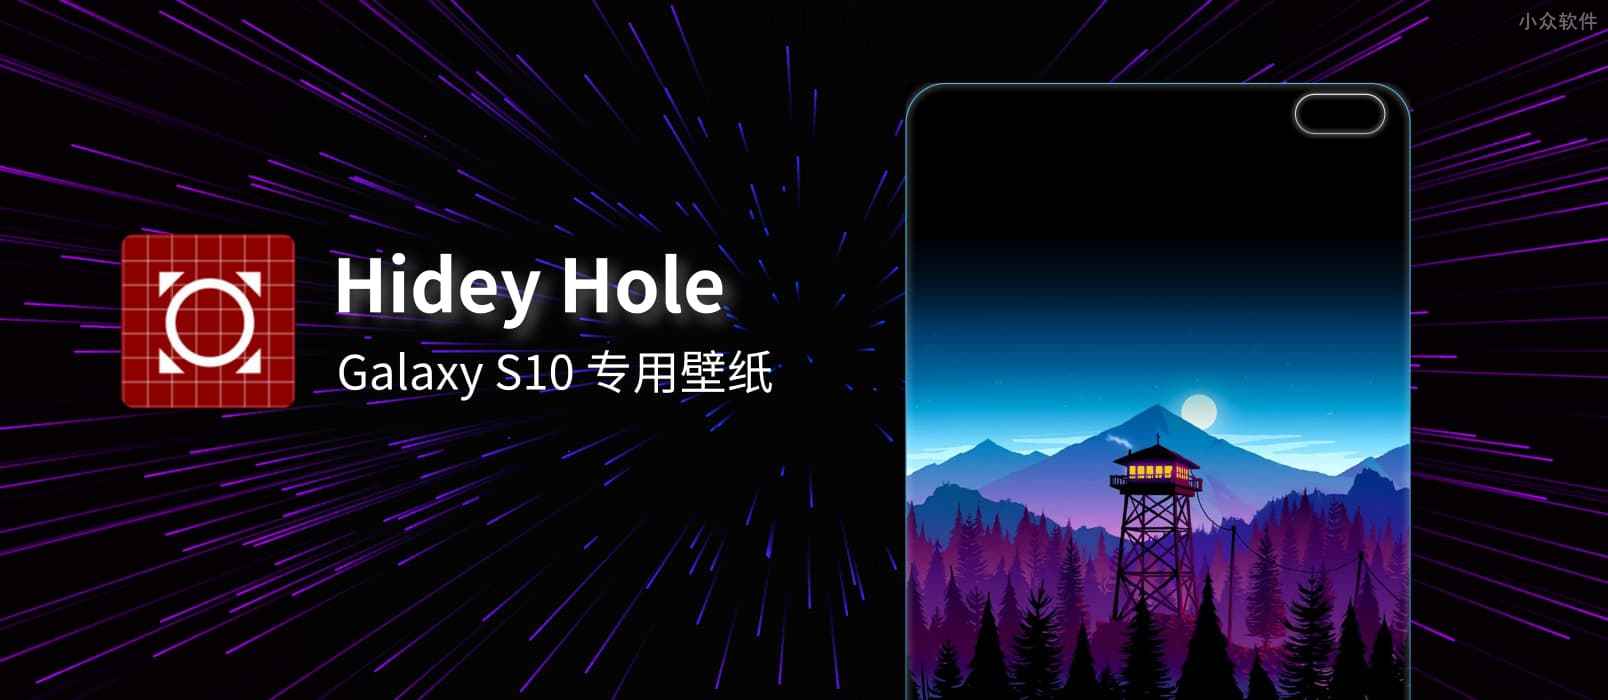 Hidey Hole – Galaxy S10 专用壁纸集，主要用于遮挡相机（隐藏孔洞）